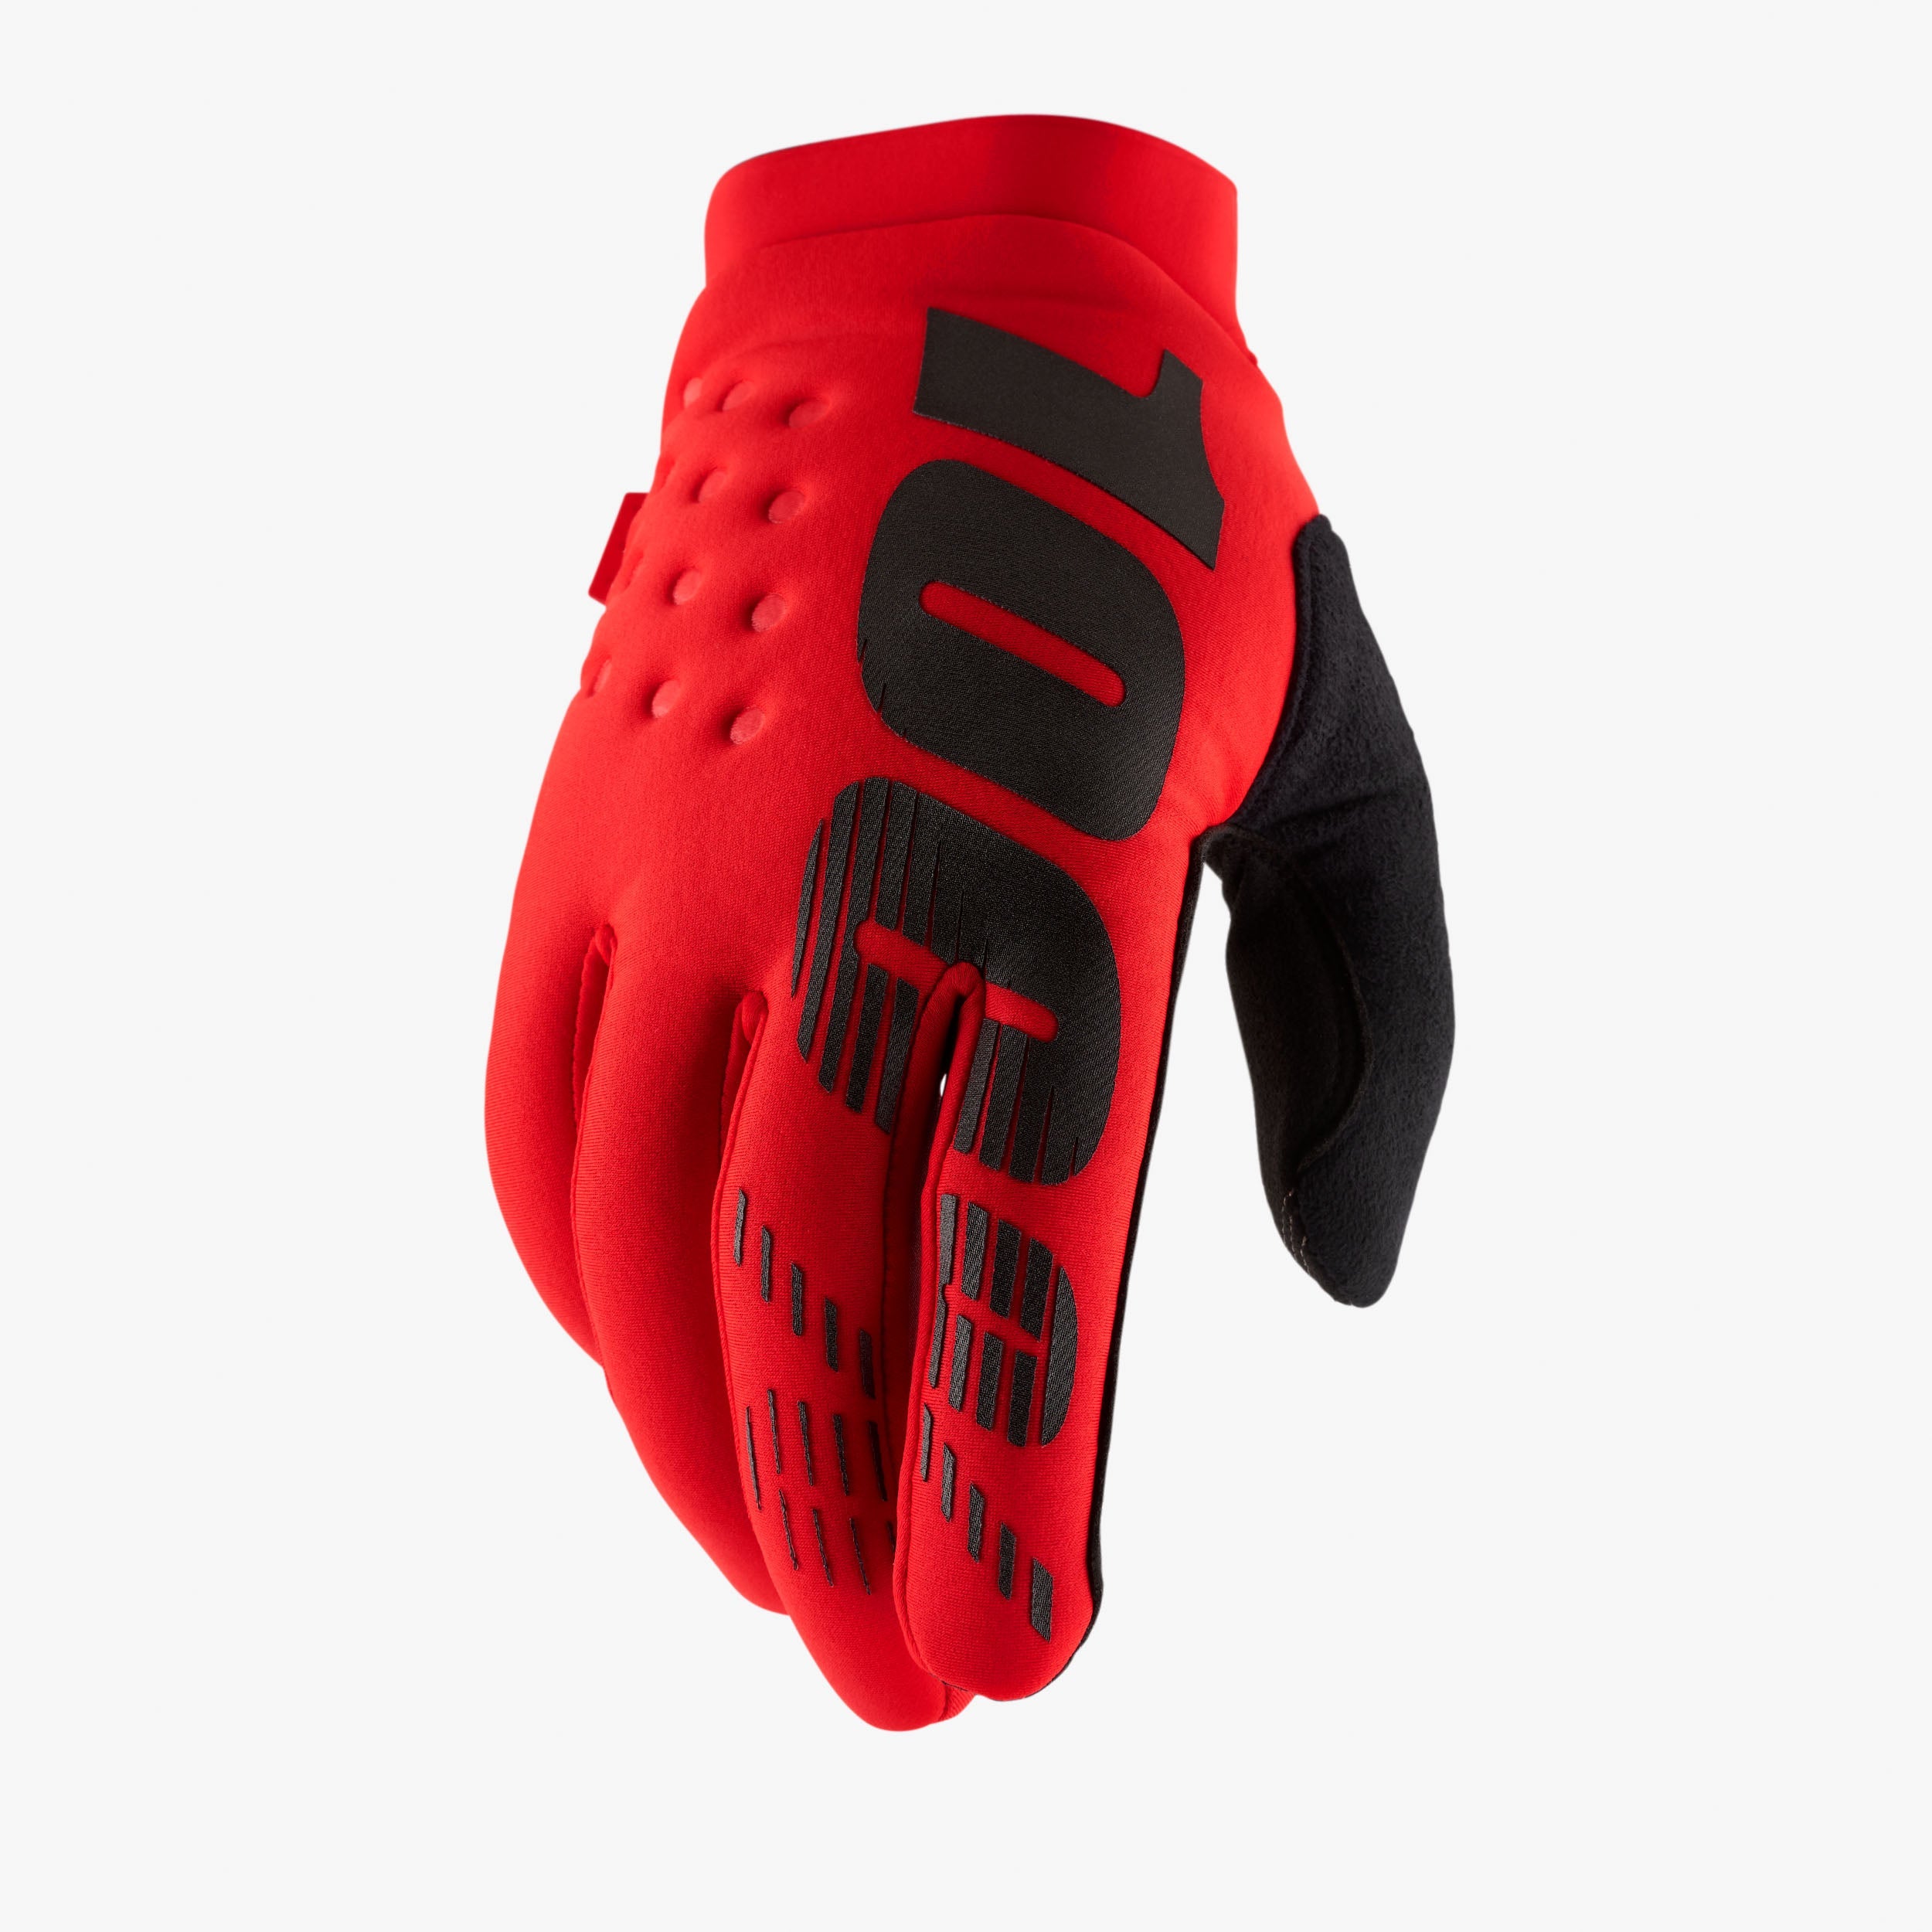 BRISKER Gloves Red - Secondary